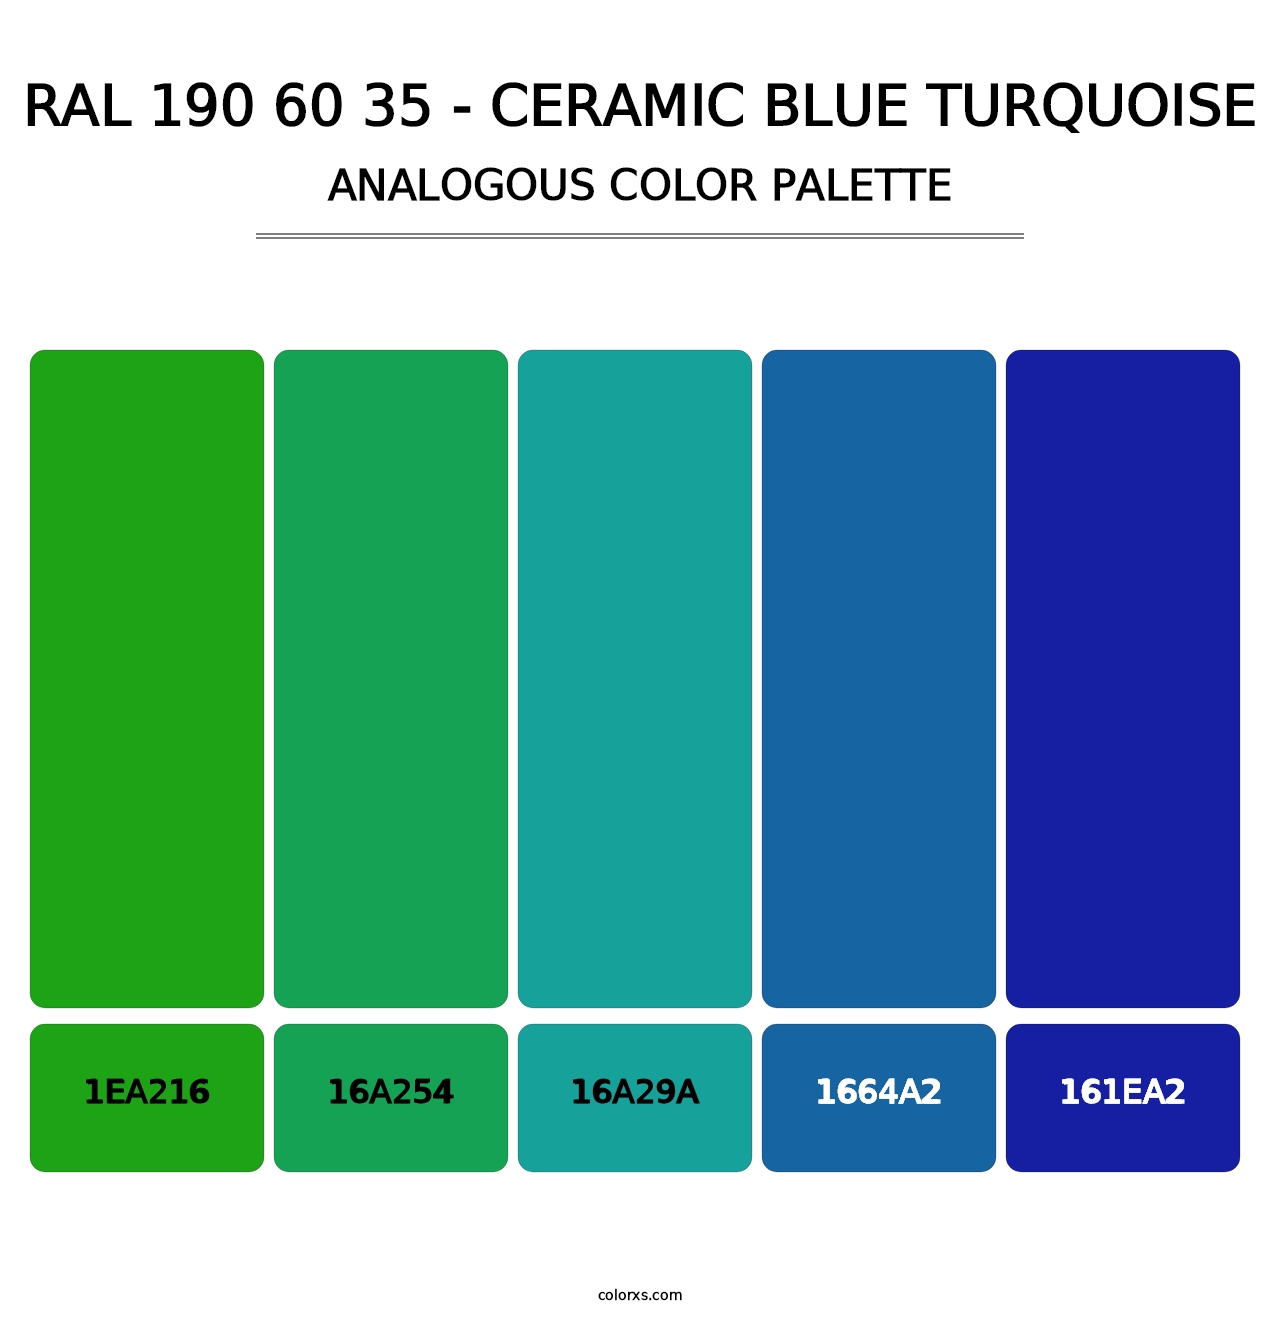 RAL 190 60 35 - Ceramic Blue Turquoise - Analogous Color Palette